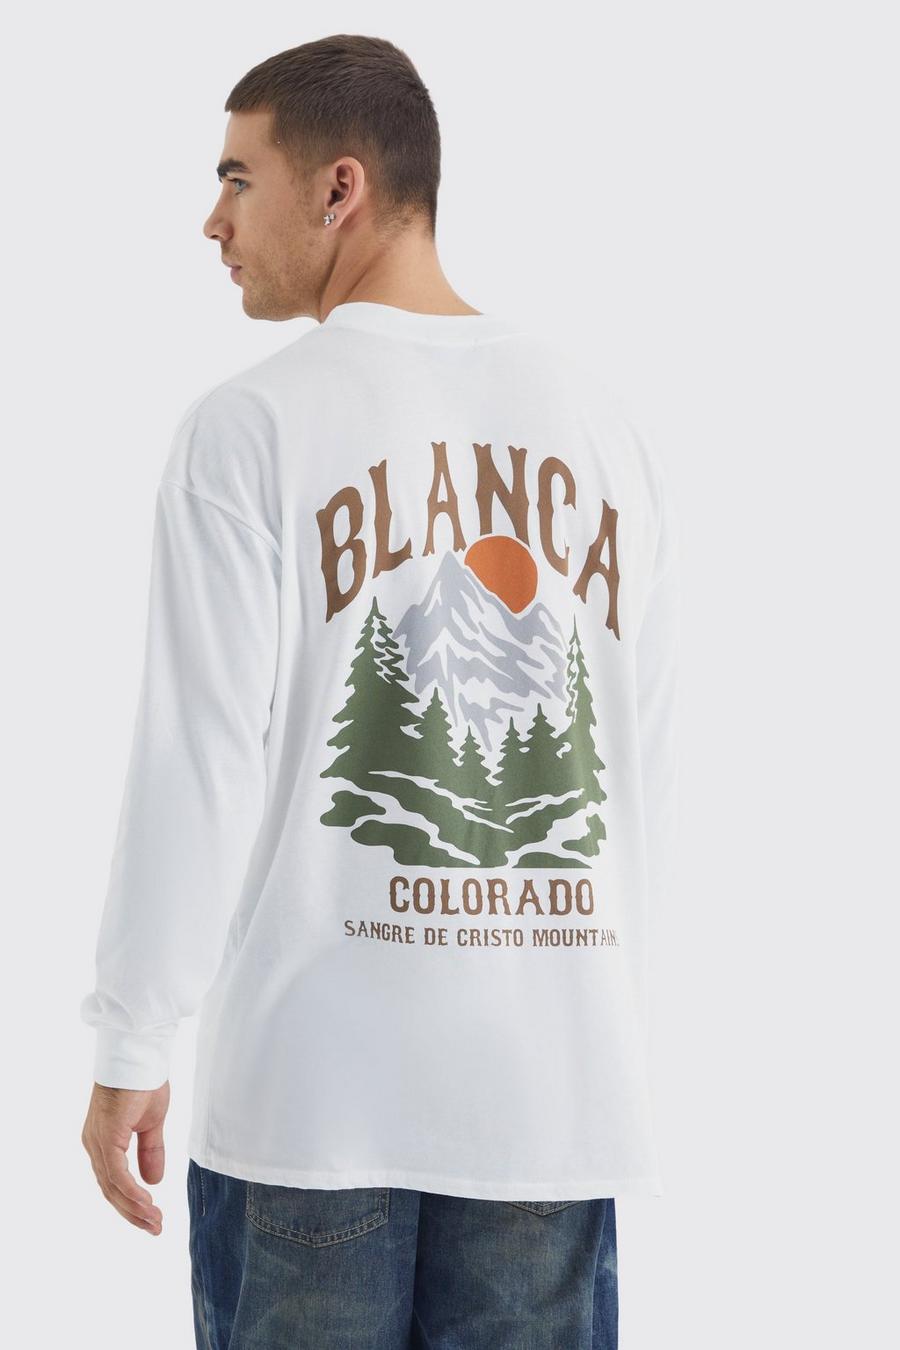 White Oversize långärmad t-shirt i Colorado